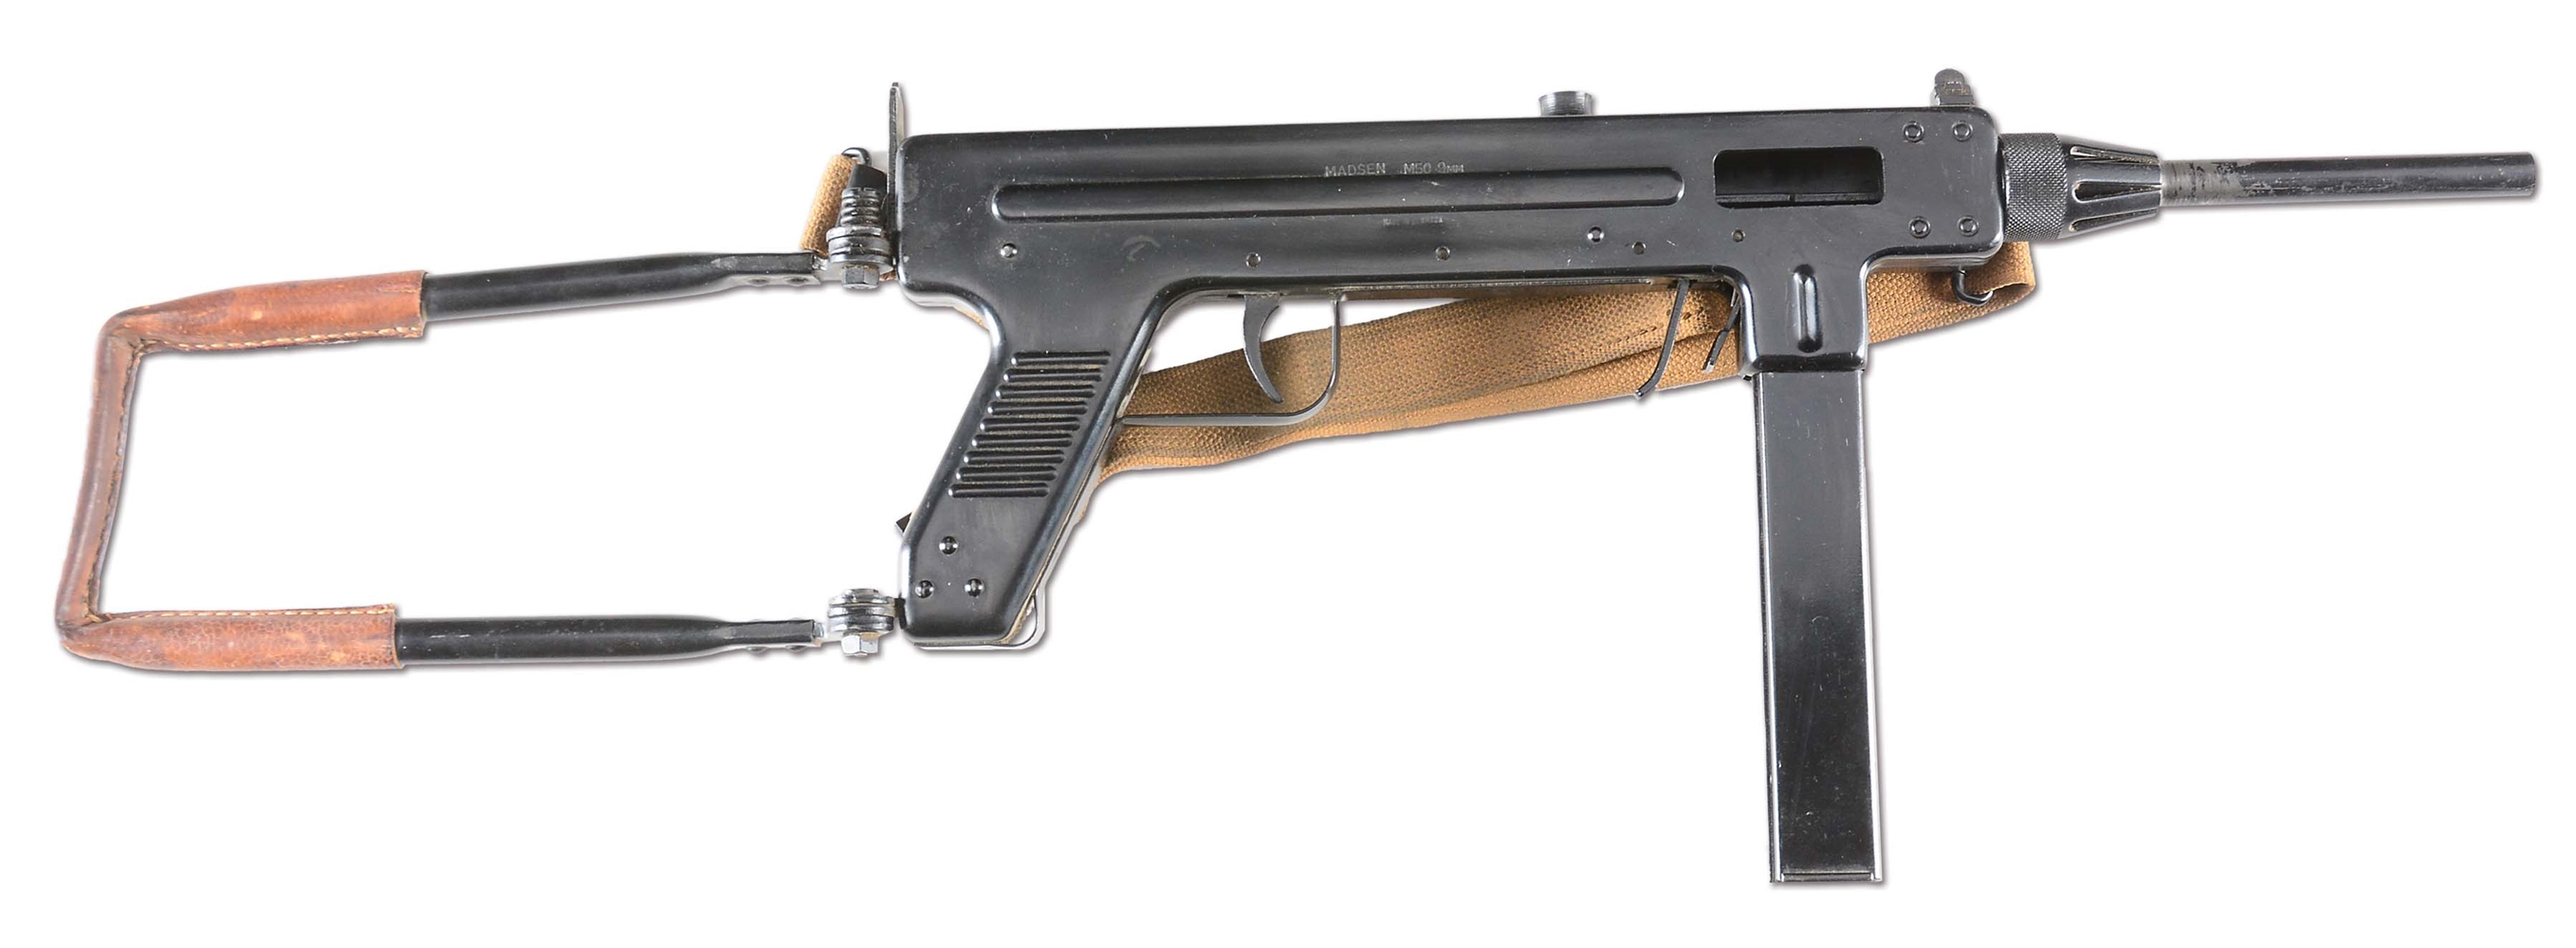 (N) EXTREMELY FINE DANISH MADSEN M-50 MACHINE GUN (FULLY TRANSFERABLE).